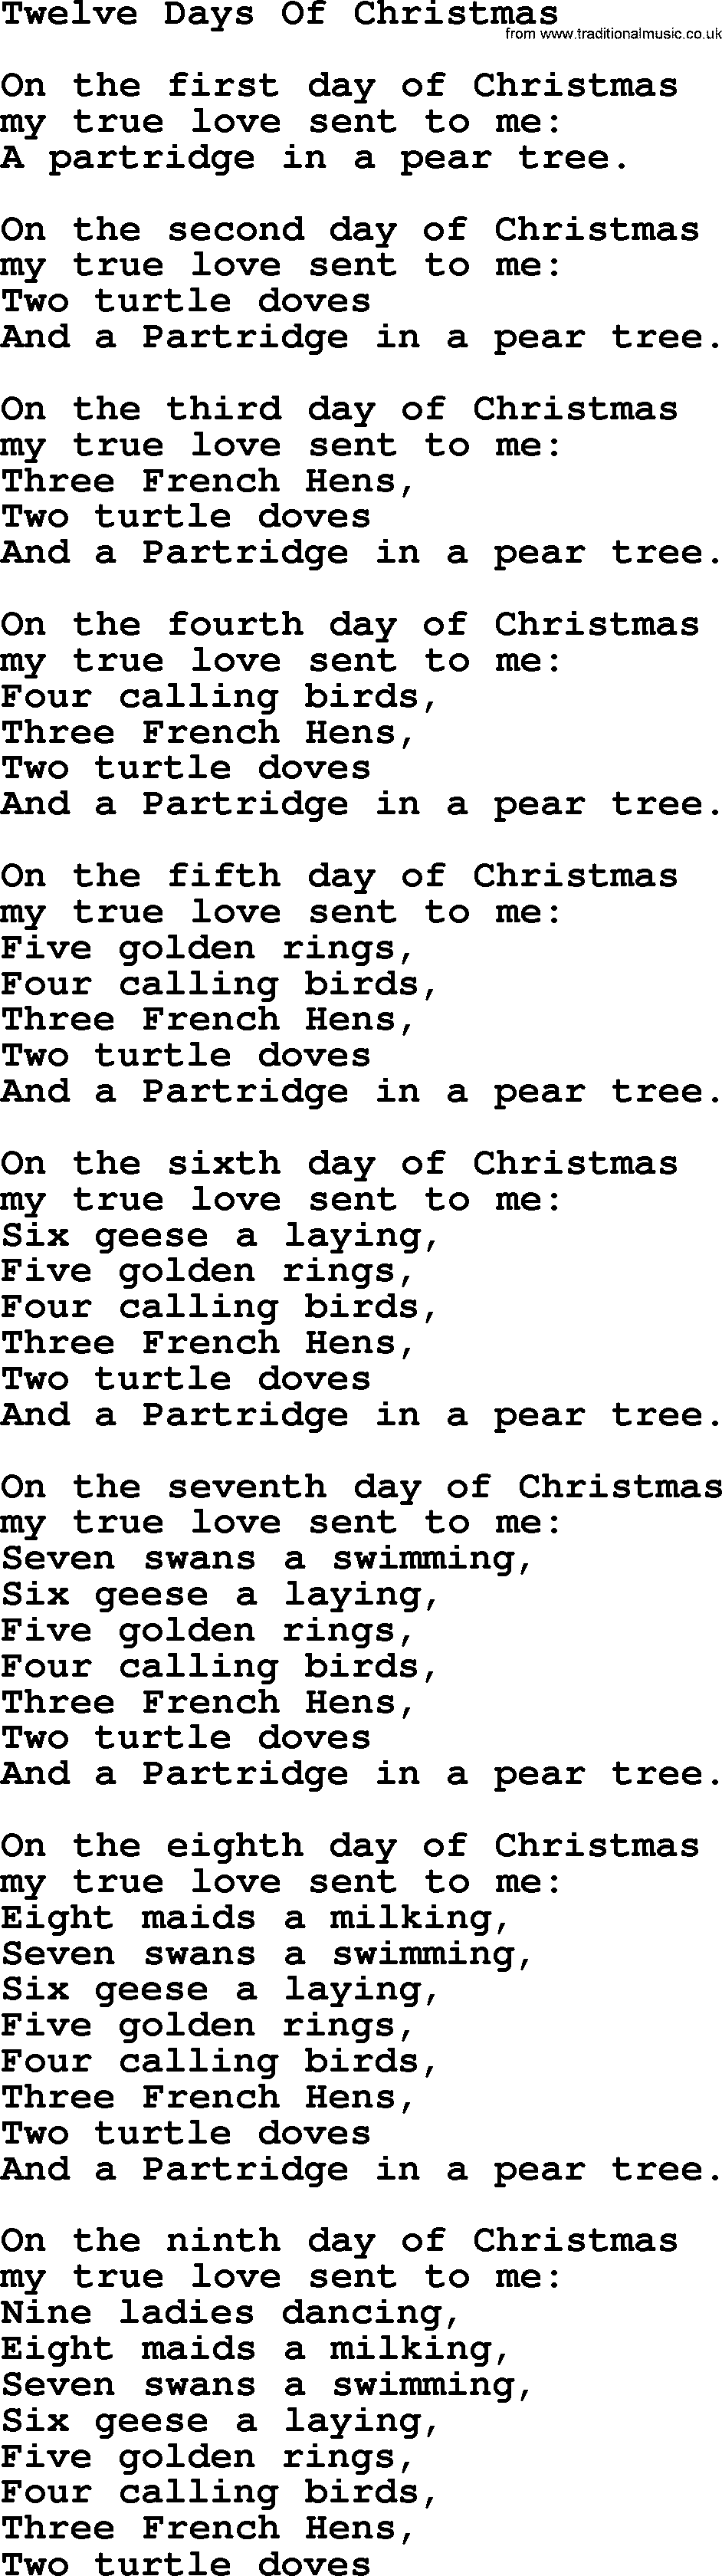 Catholic Hymns, Song Twelve Days Of Christmas lyrics and PDF